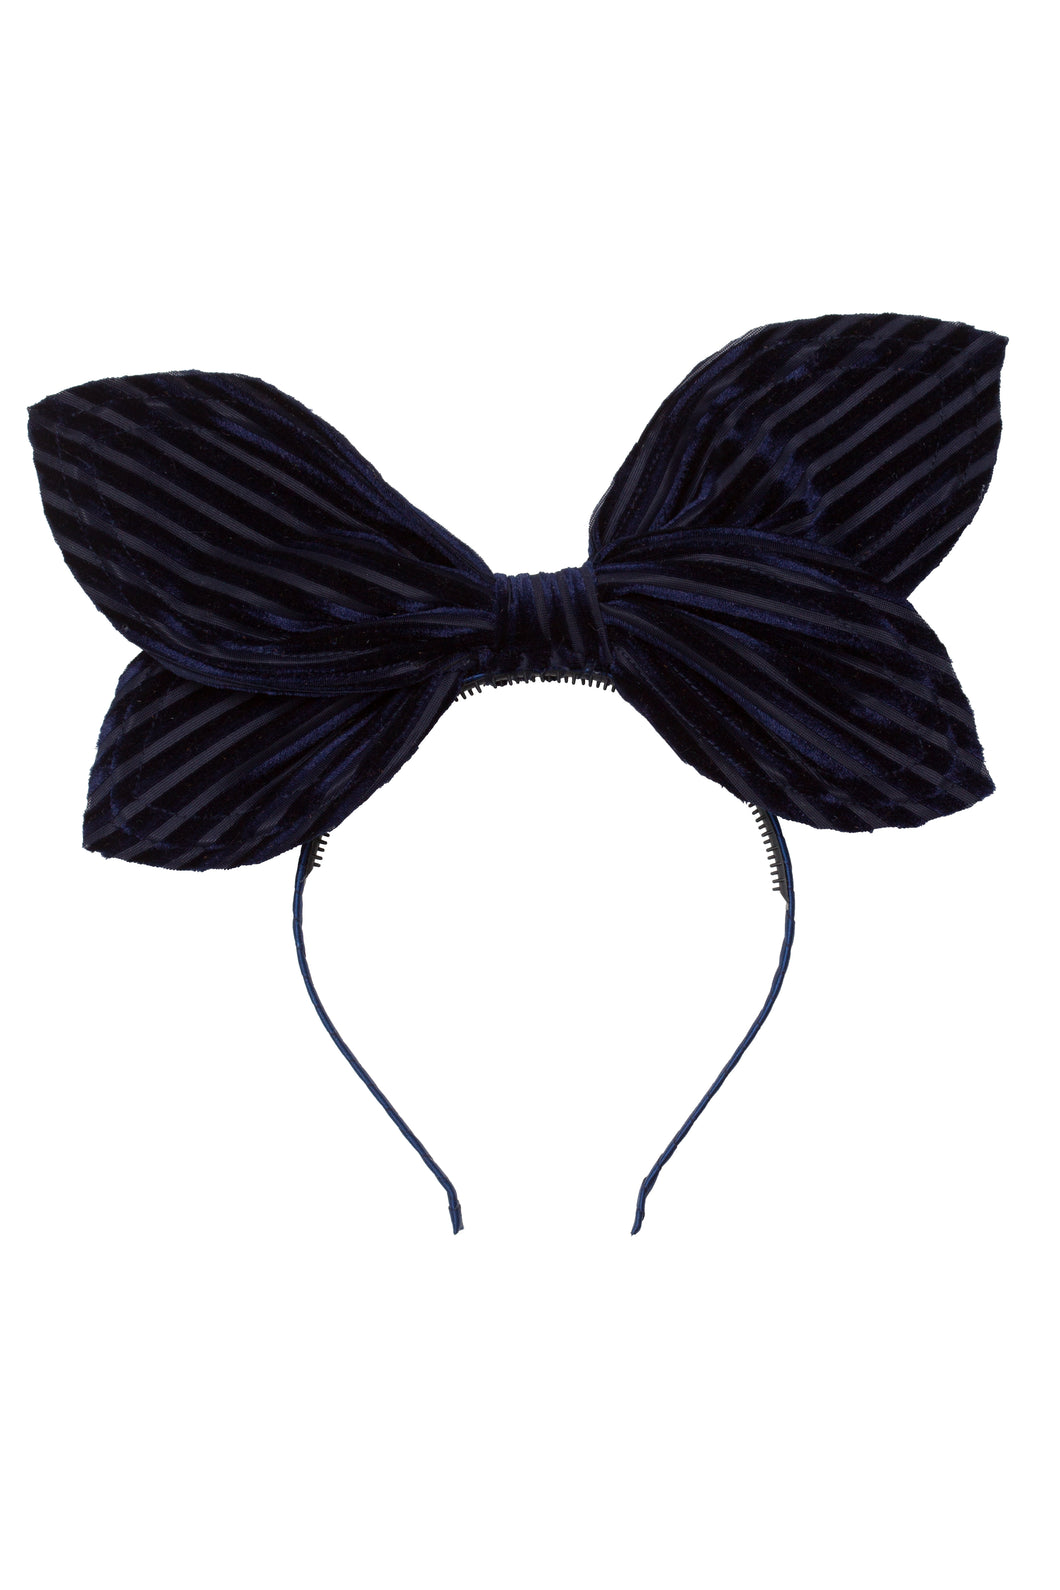 Growing Orchid Headband - Navy Velvet Stripe